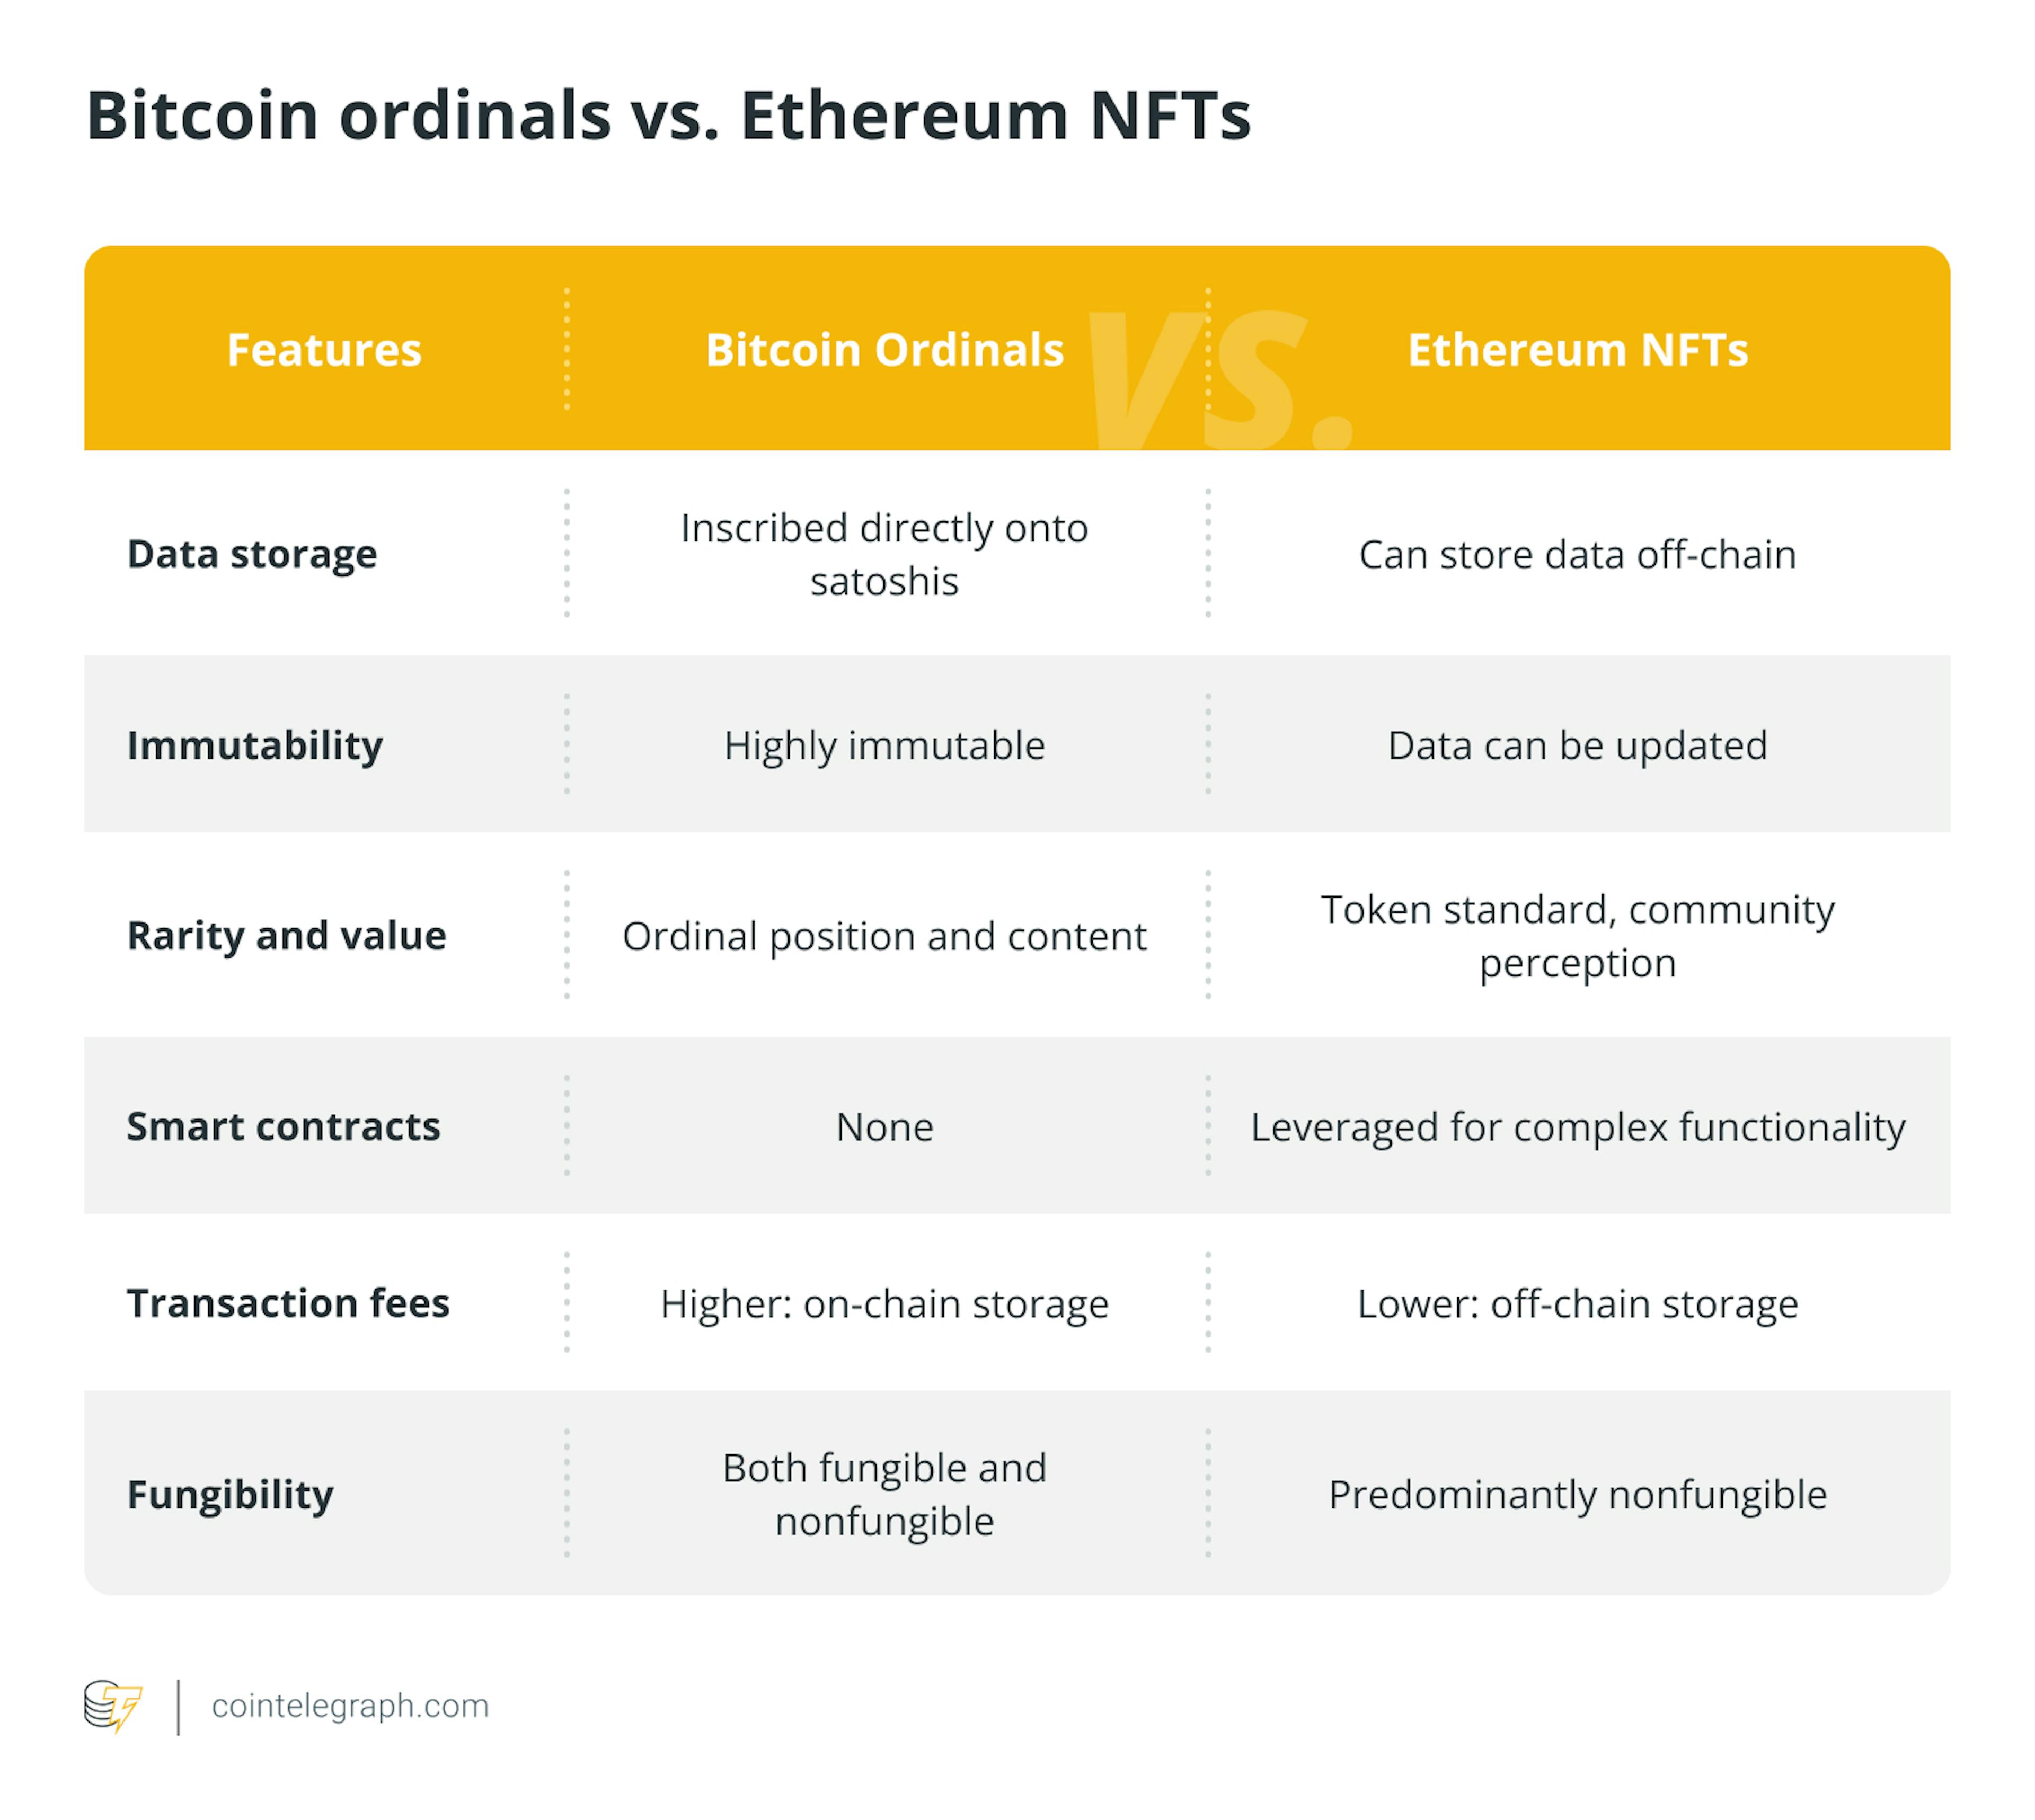 https://cointelegraph.com/learn/bitcoin-ordinals-vs-ethereum-nfts